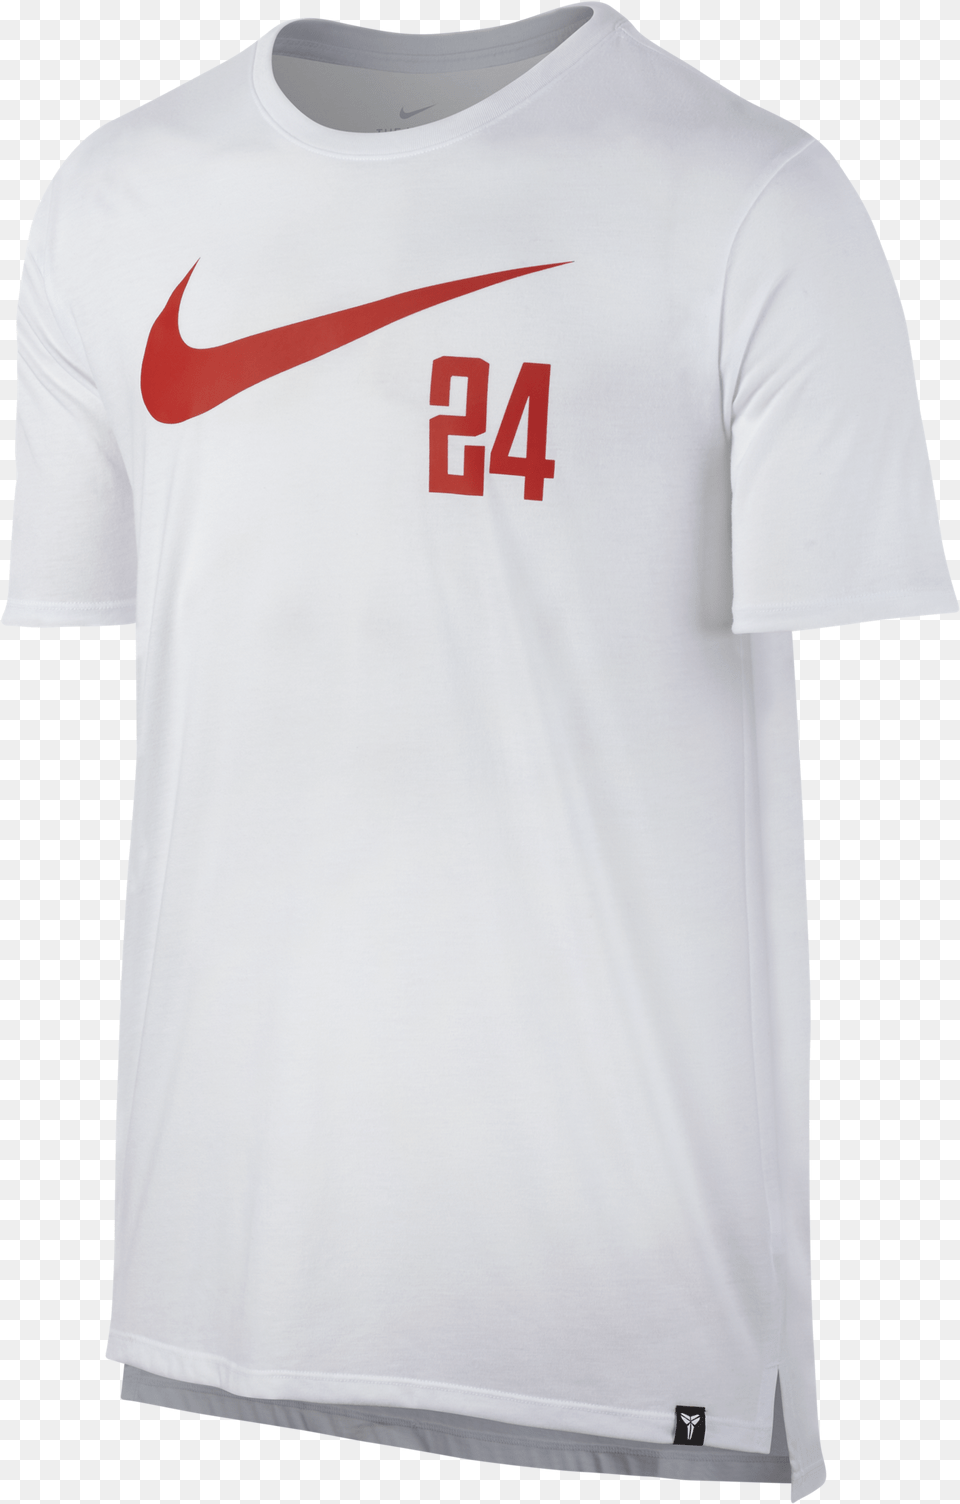 Nike Dry Kobe Swoosh 24 Tee Active Shirt, Clothing, T-shirt Png